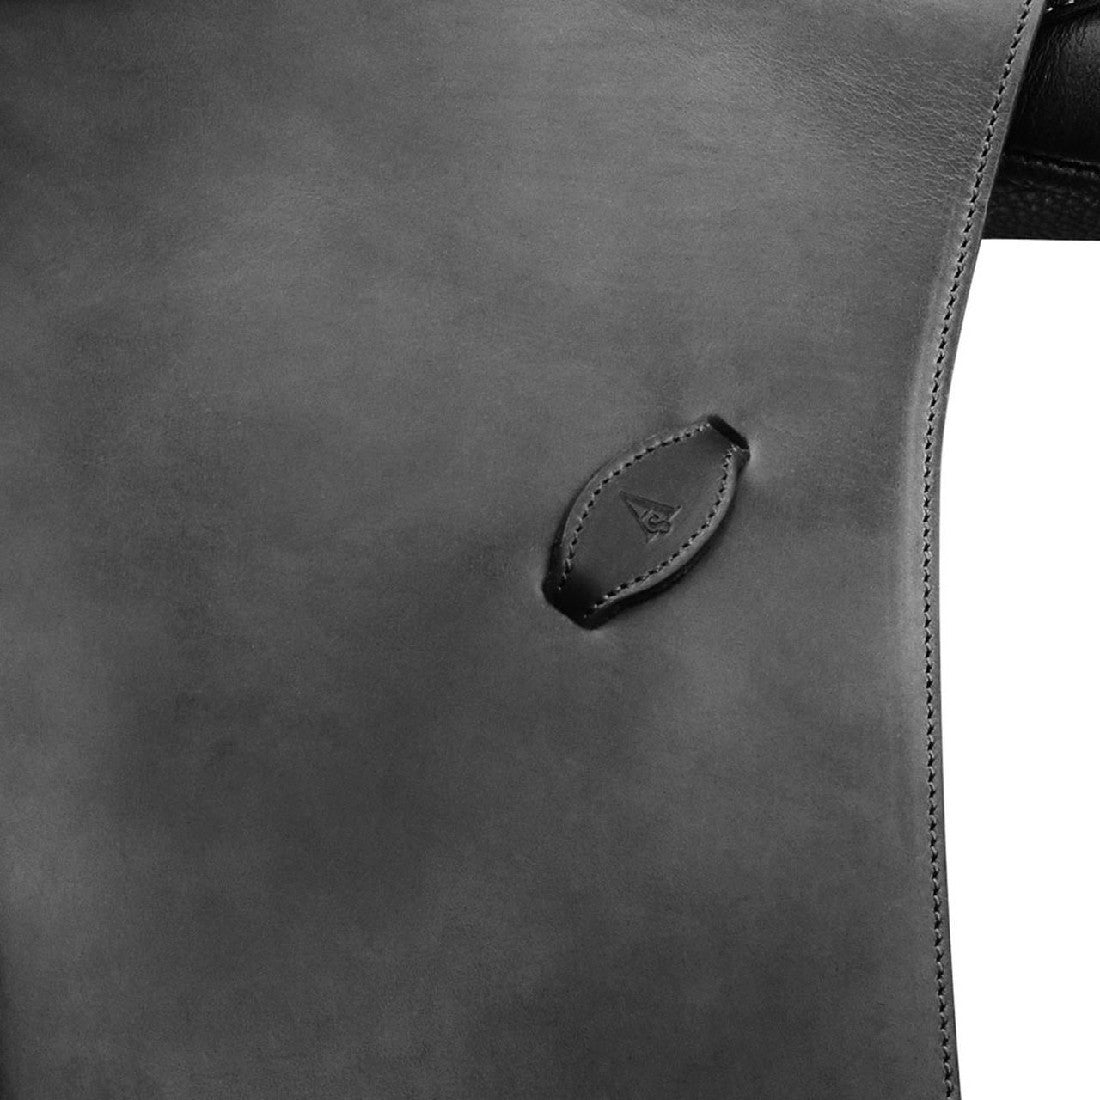 Close-up of Arena Saddles logo on black leather saddle detail.